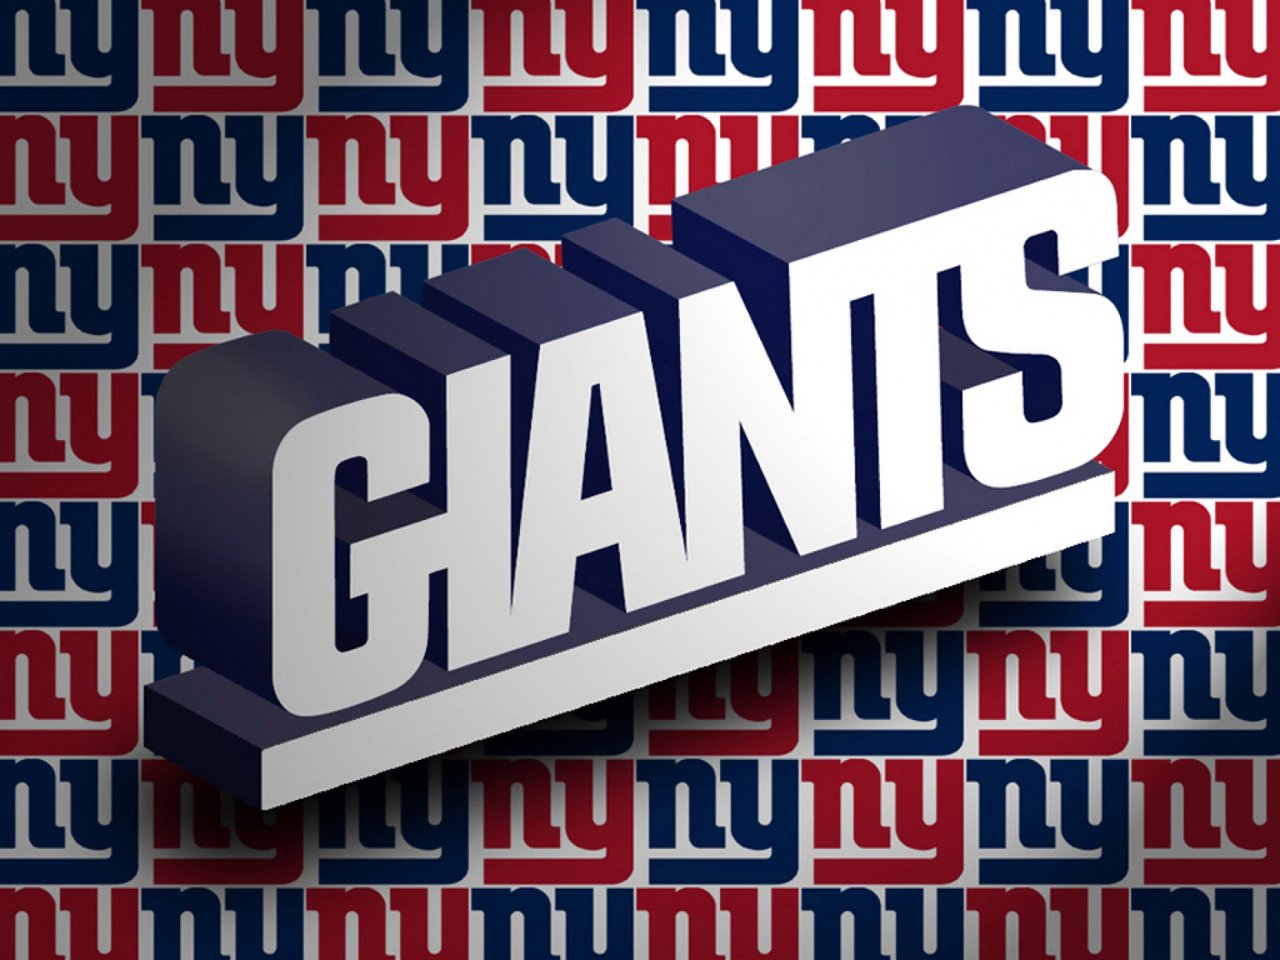  New York Giants wallpaper wallpaper New York Giants wallpapers 1280x960